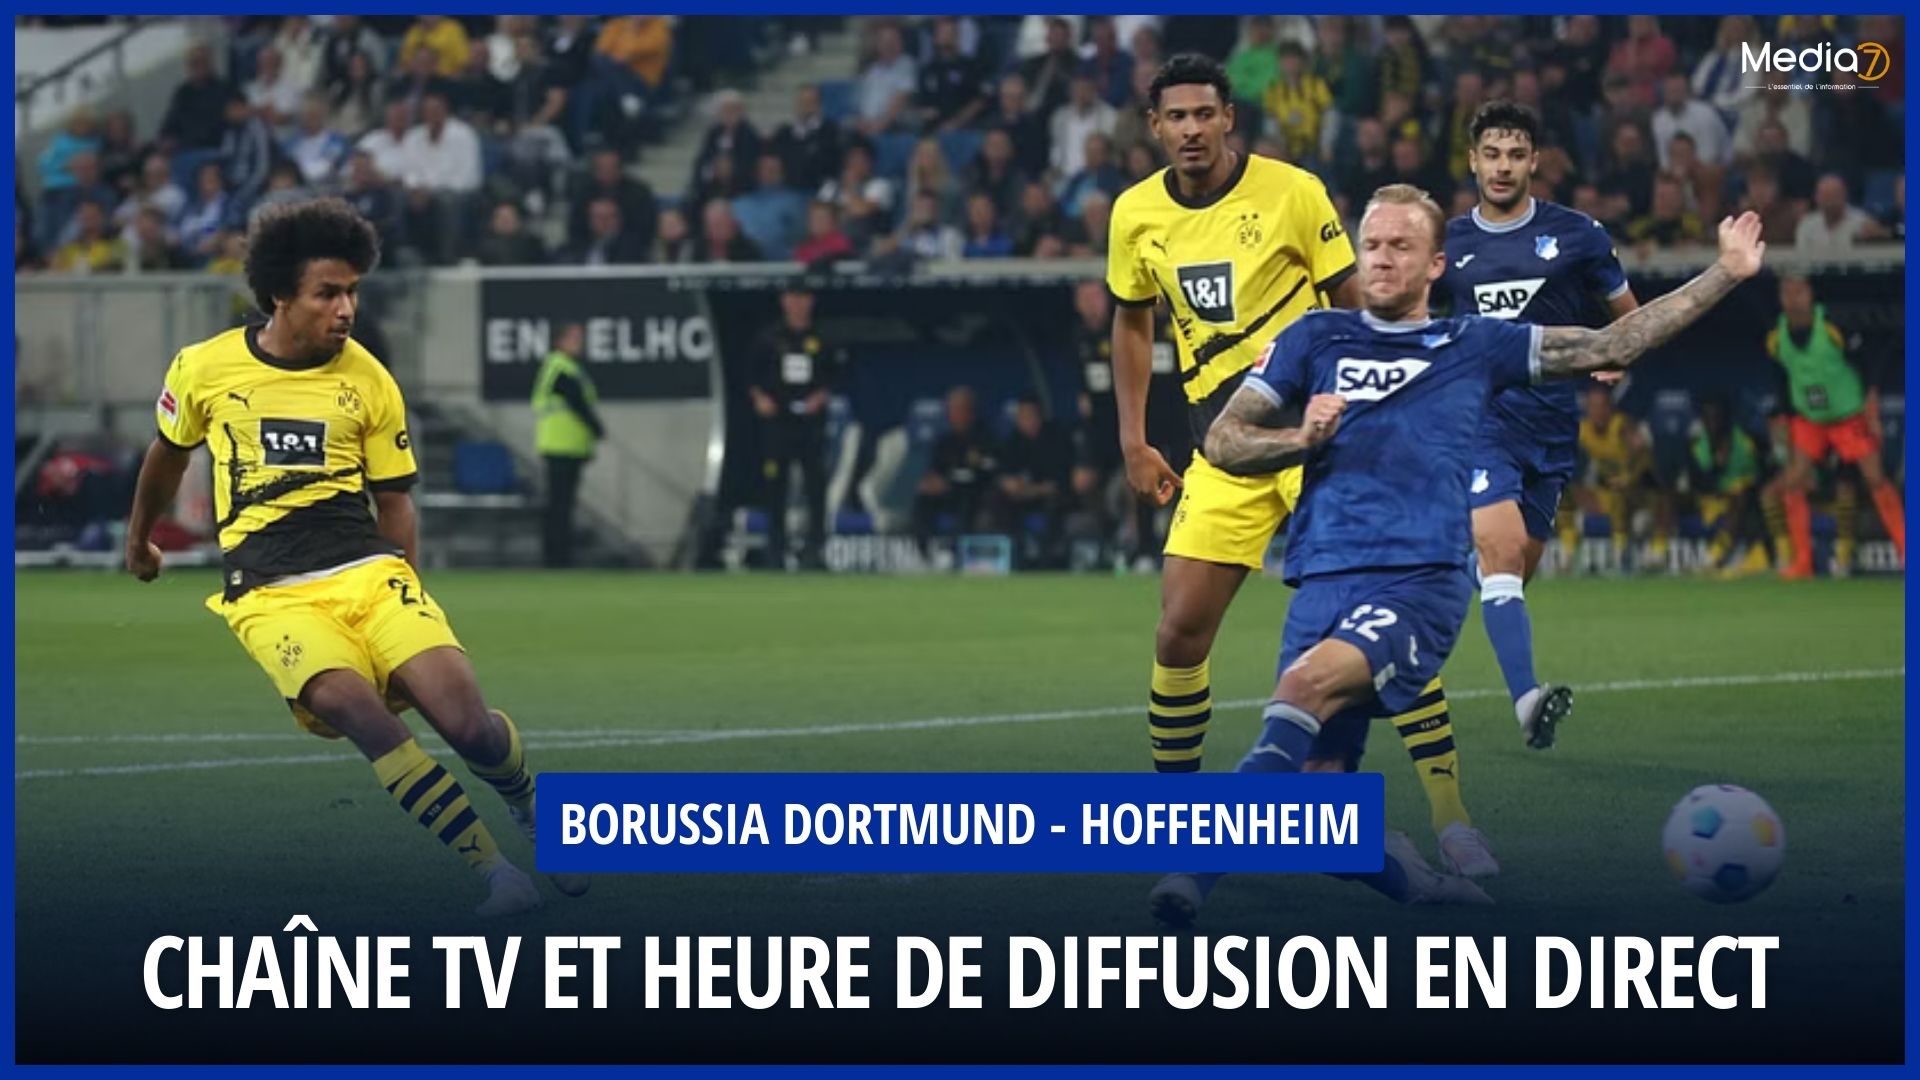 Borussia Dortmund - Hoffenheim Match: TV Channel and Live Broadcast Time - Media7